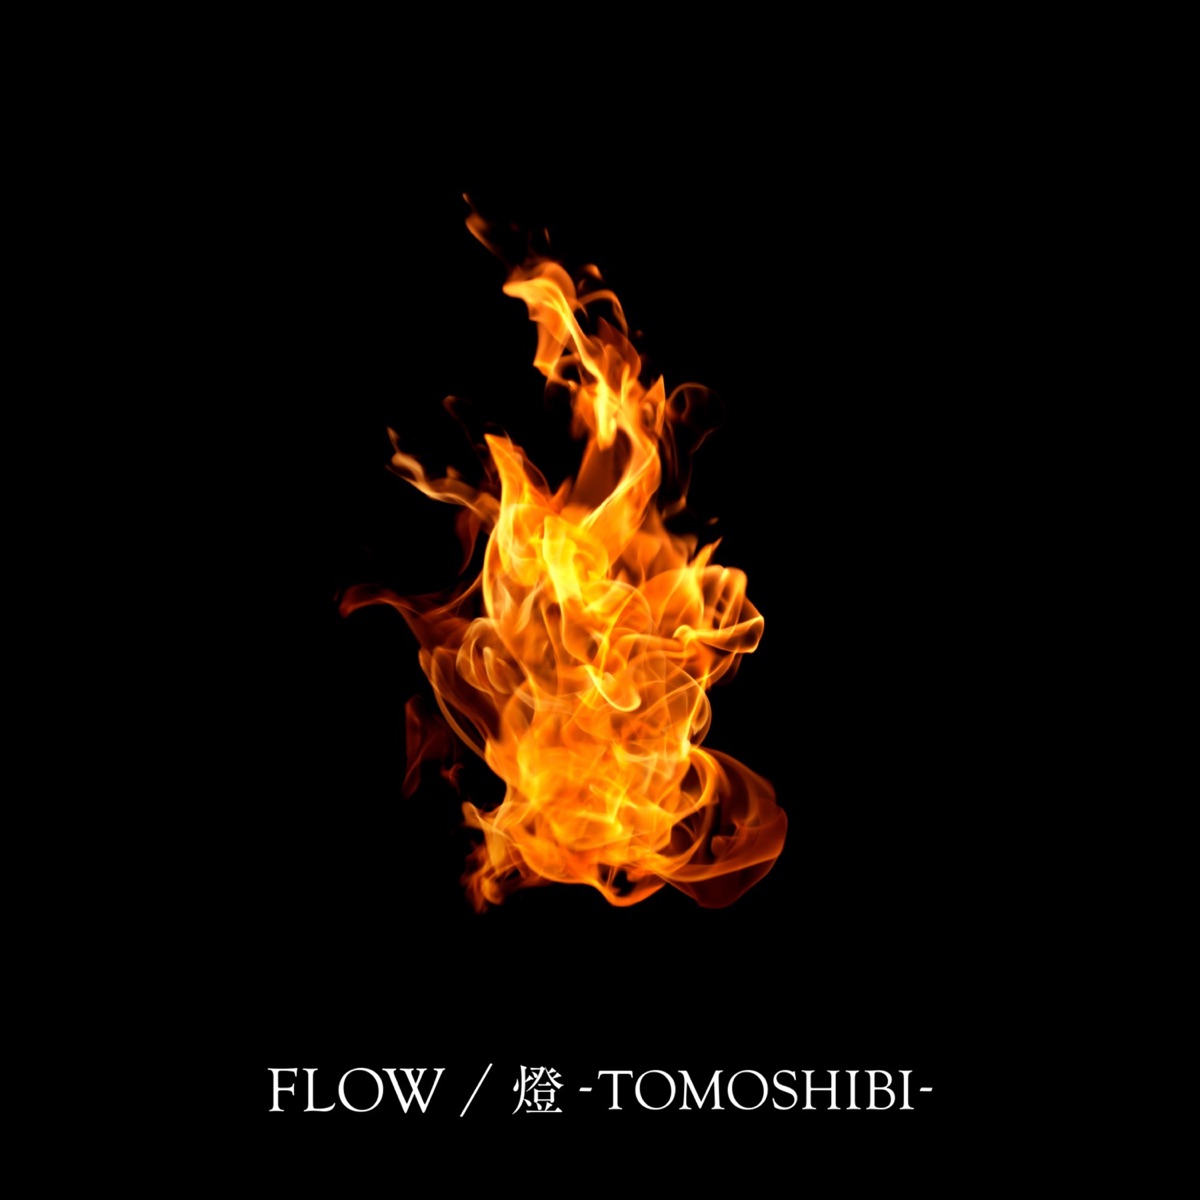 FLOW - 燈 Tomoshibi